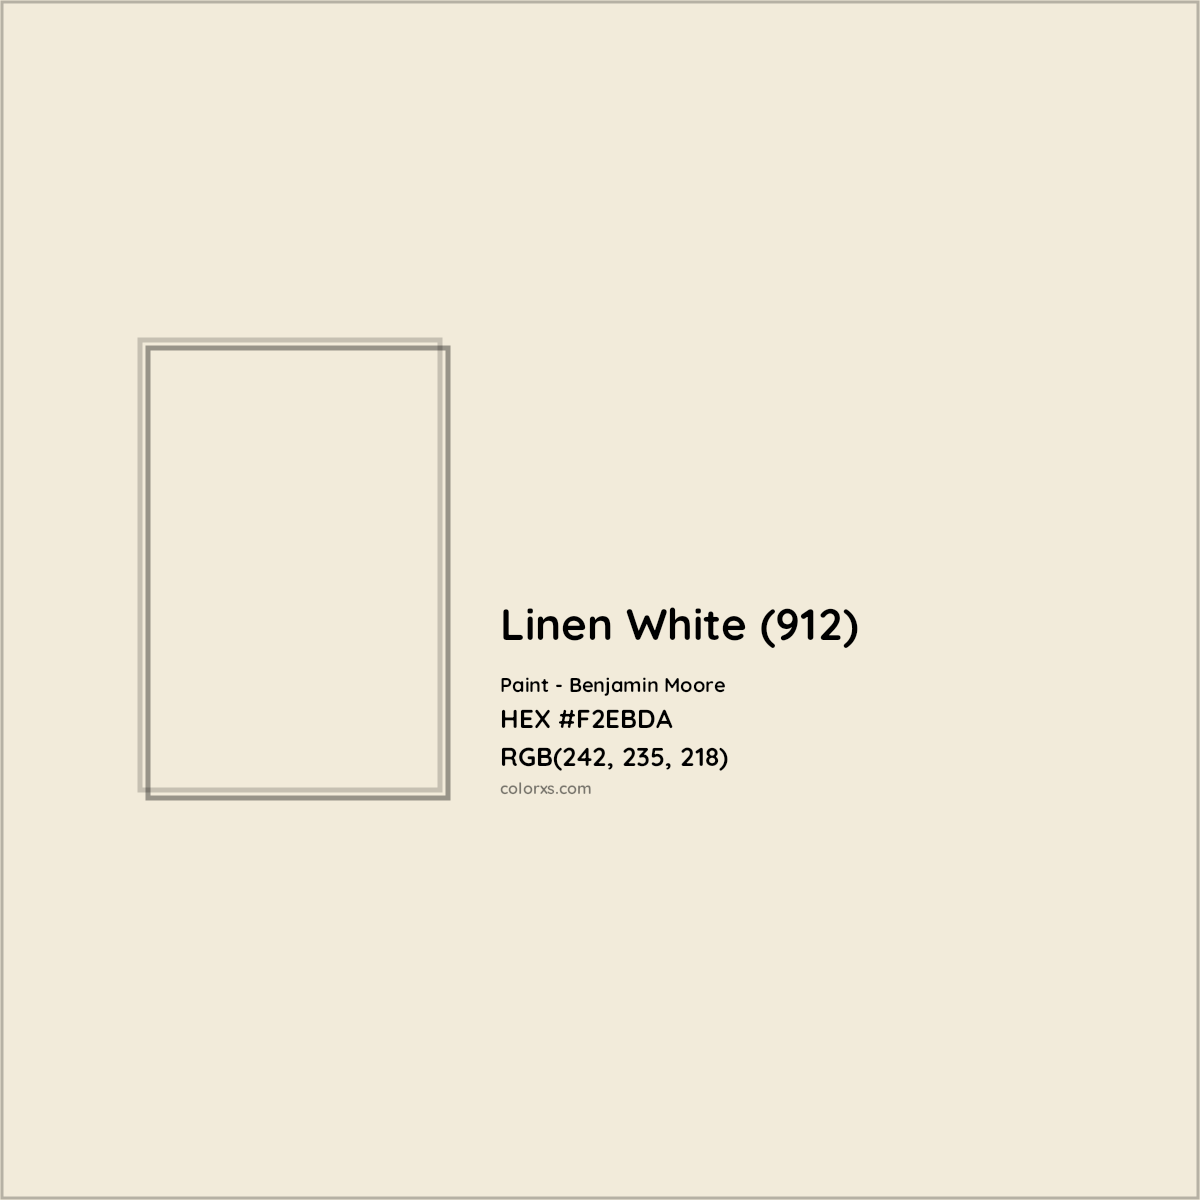 HEX #F2EBDA Linen White (912) Paint Benjamin Moore - Color Code